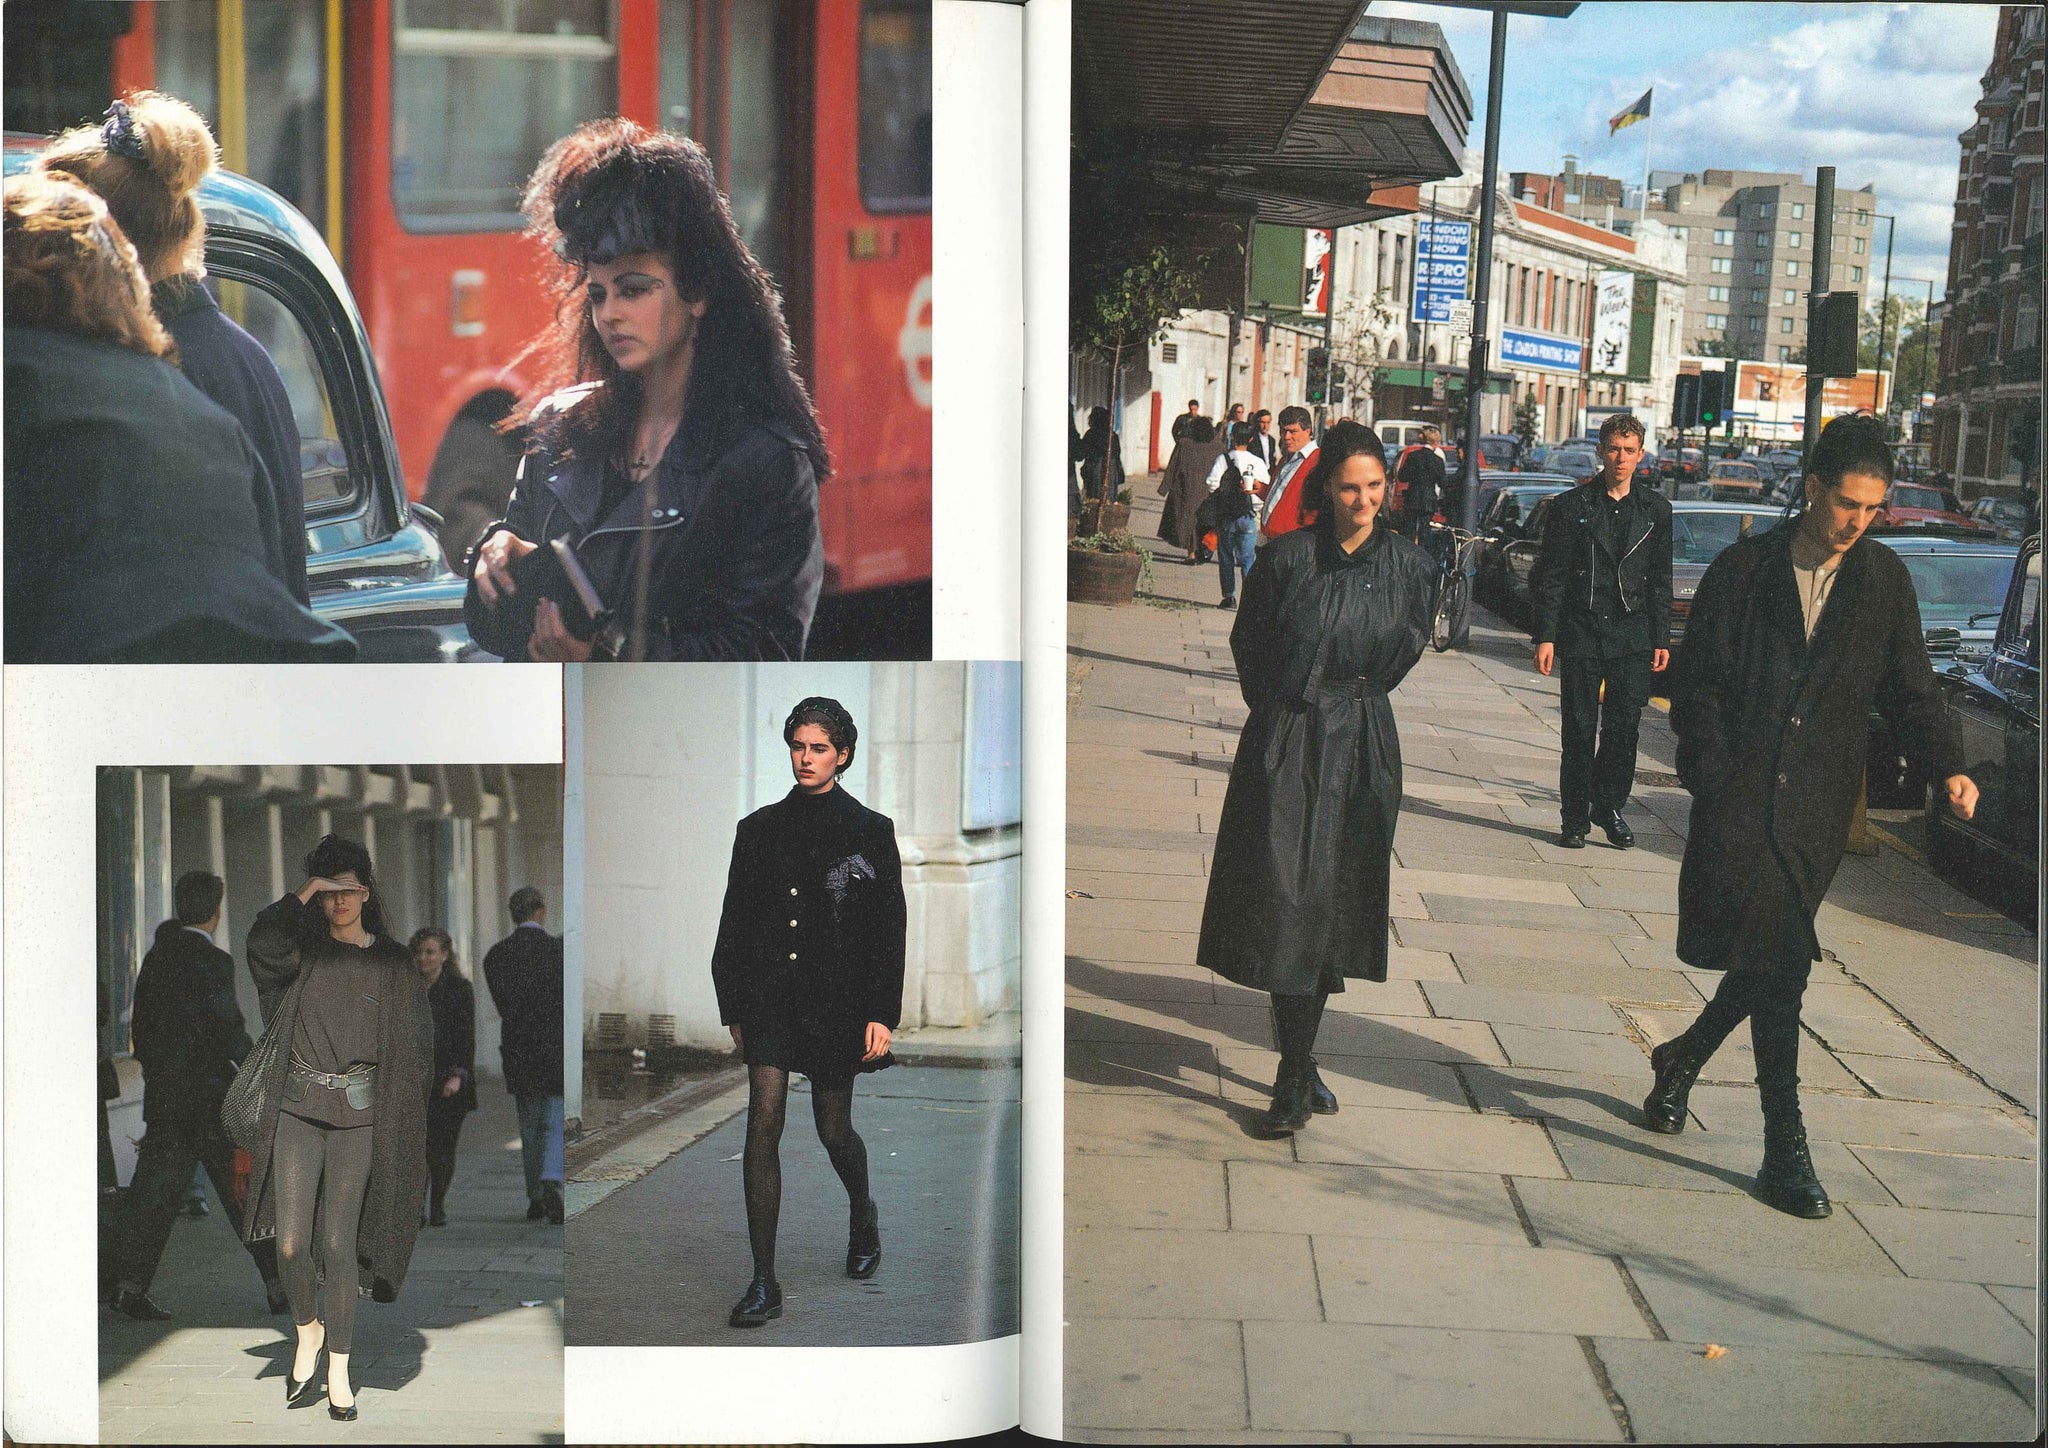 STREET magazine no. 13 / january 1988 / london collections / Shoichi Aoki